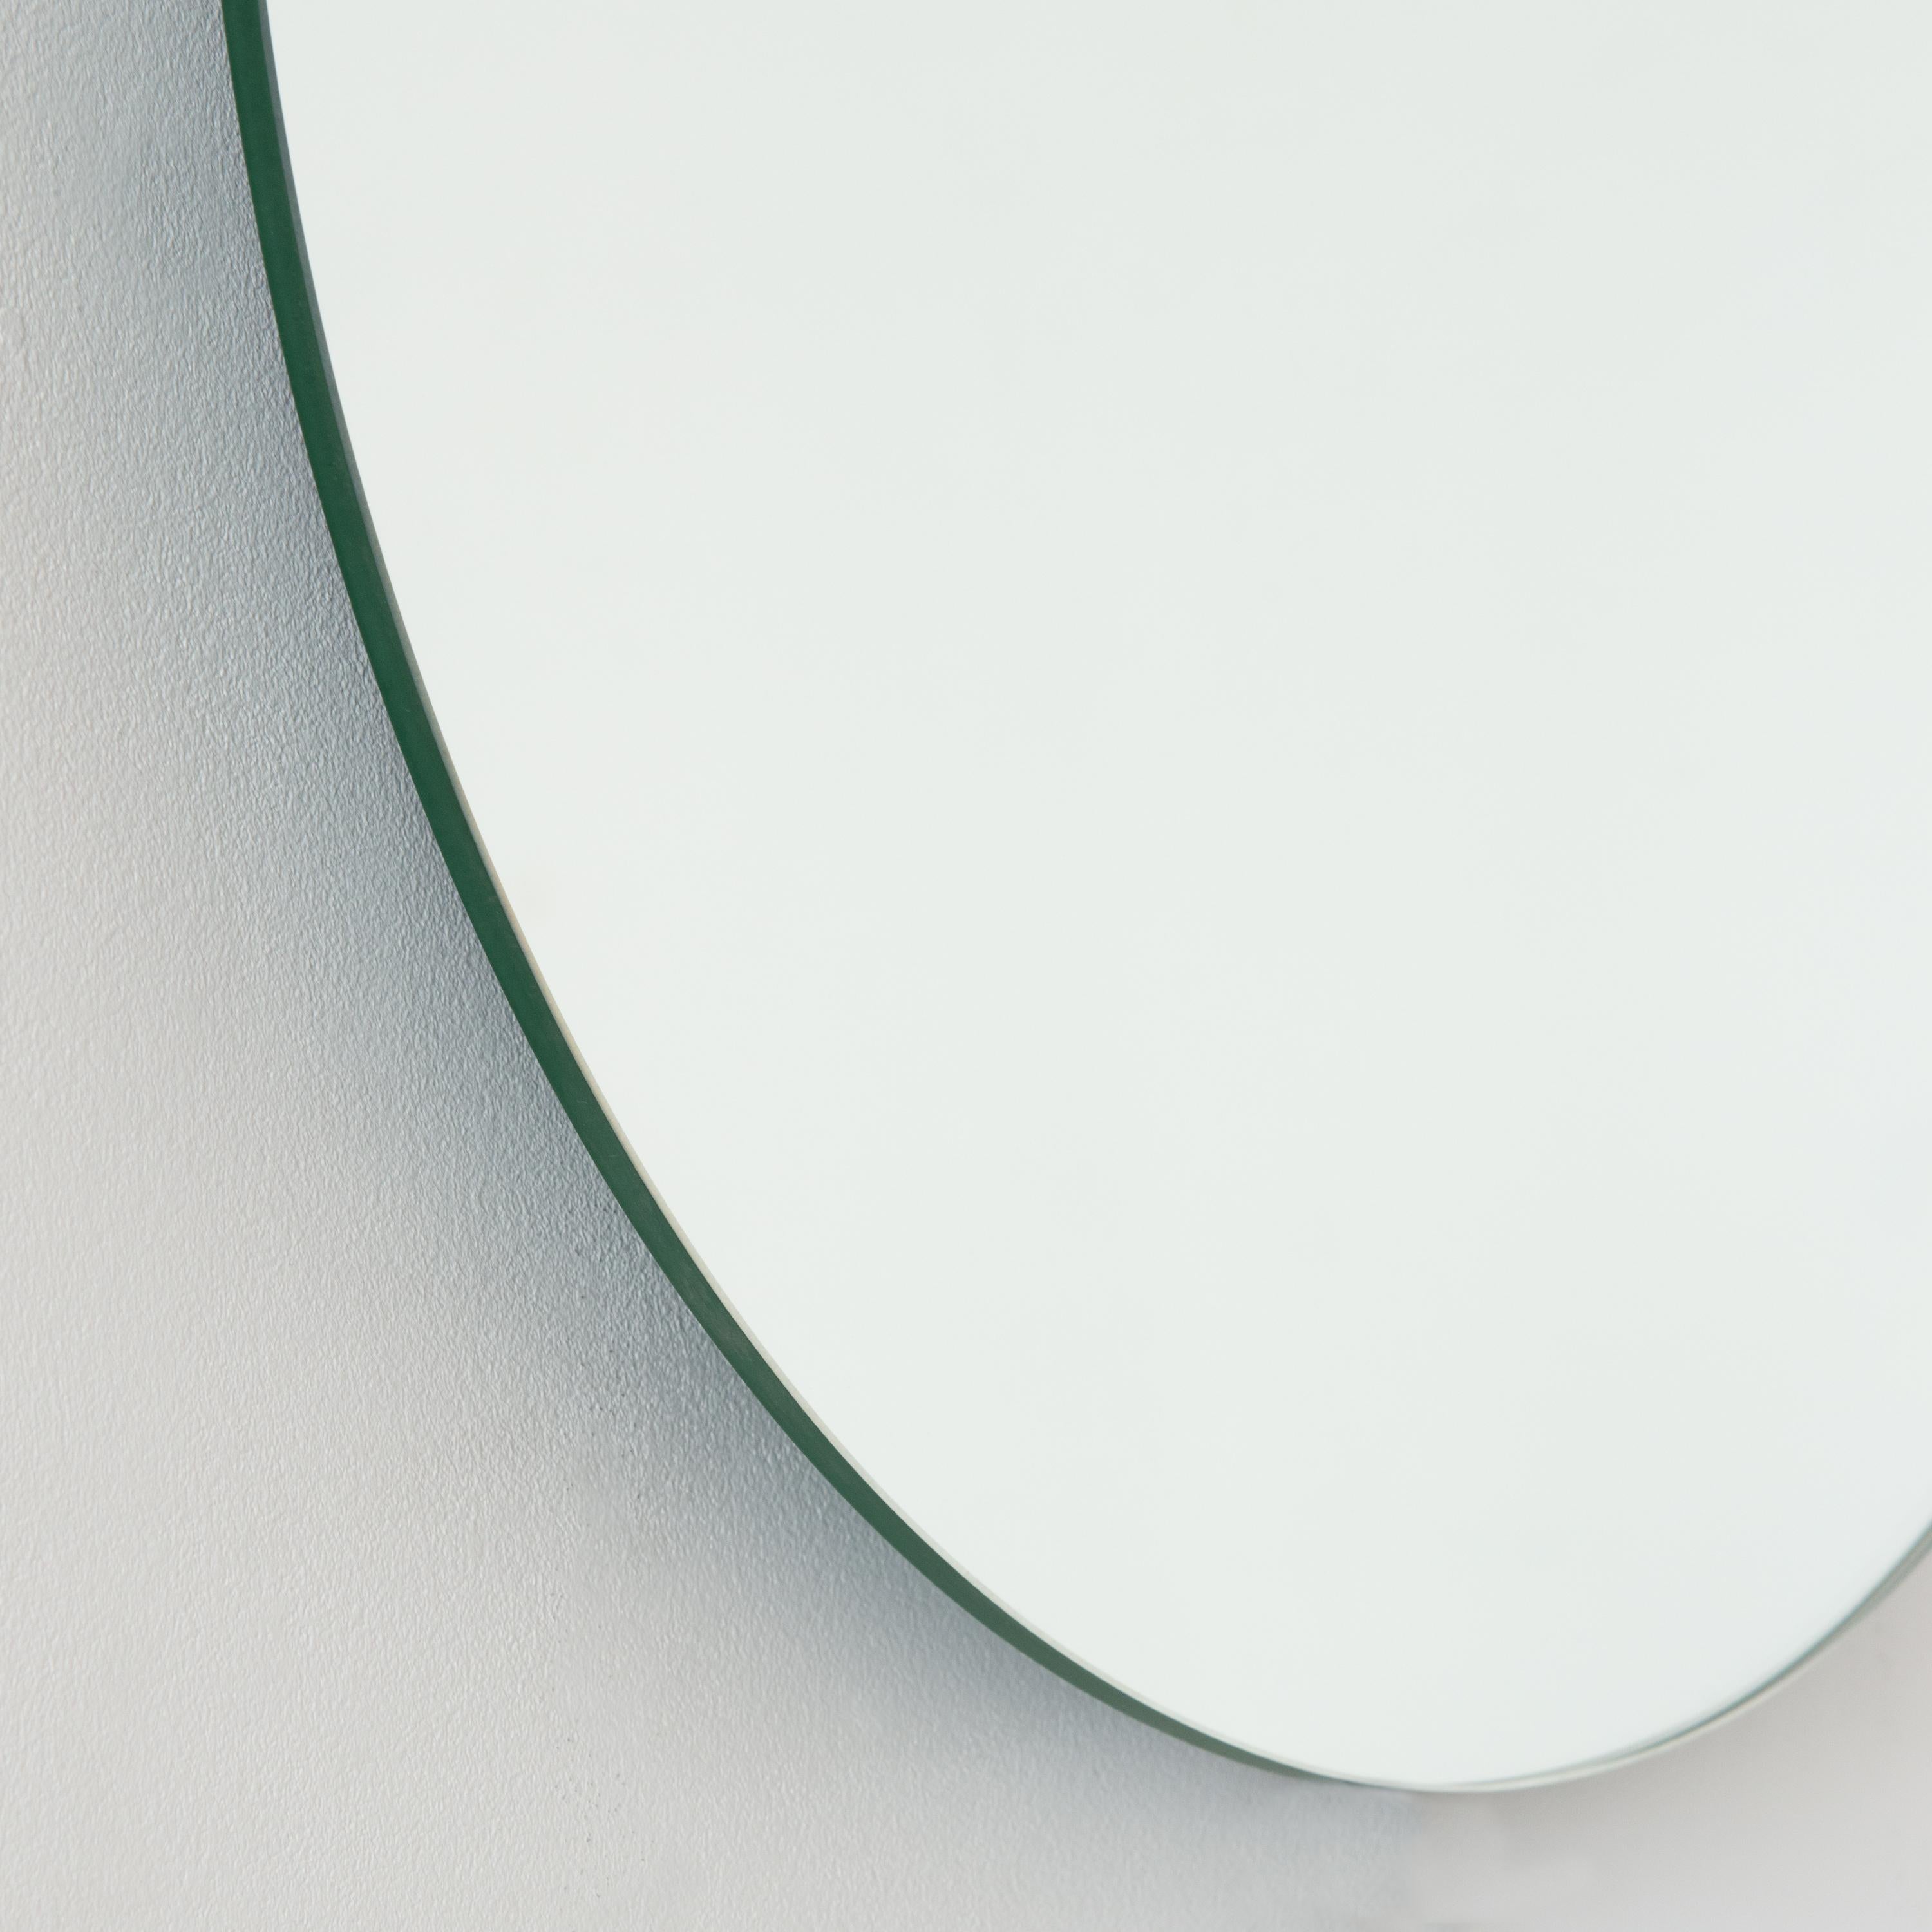 Orbis Blue Tinted Round Contemporary Frameless Mirror, Medium For Sale 4